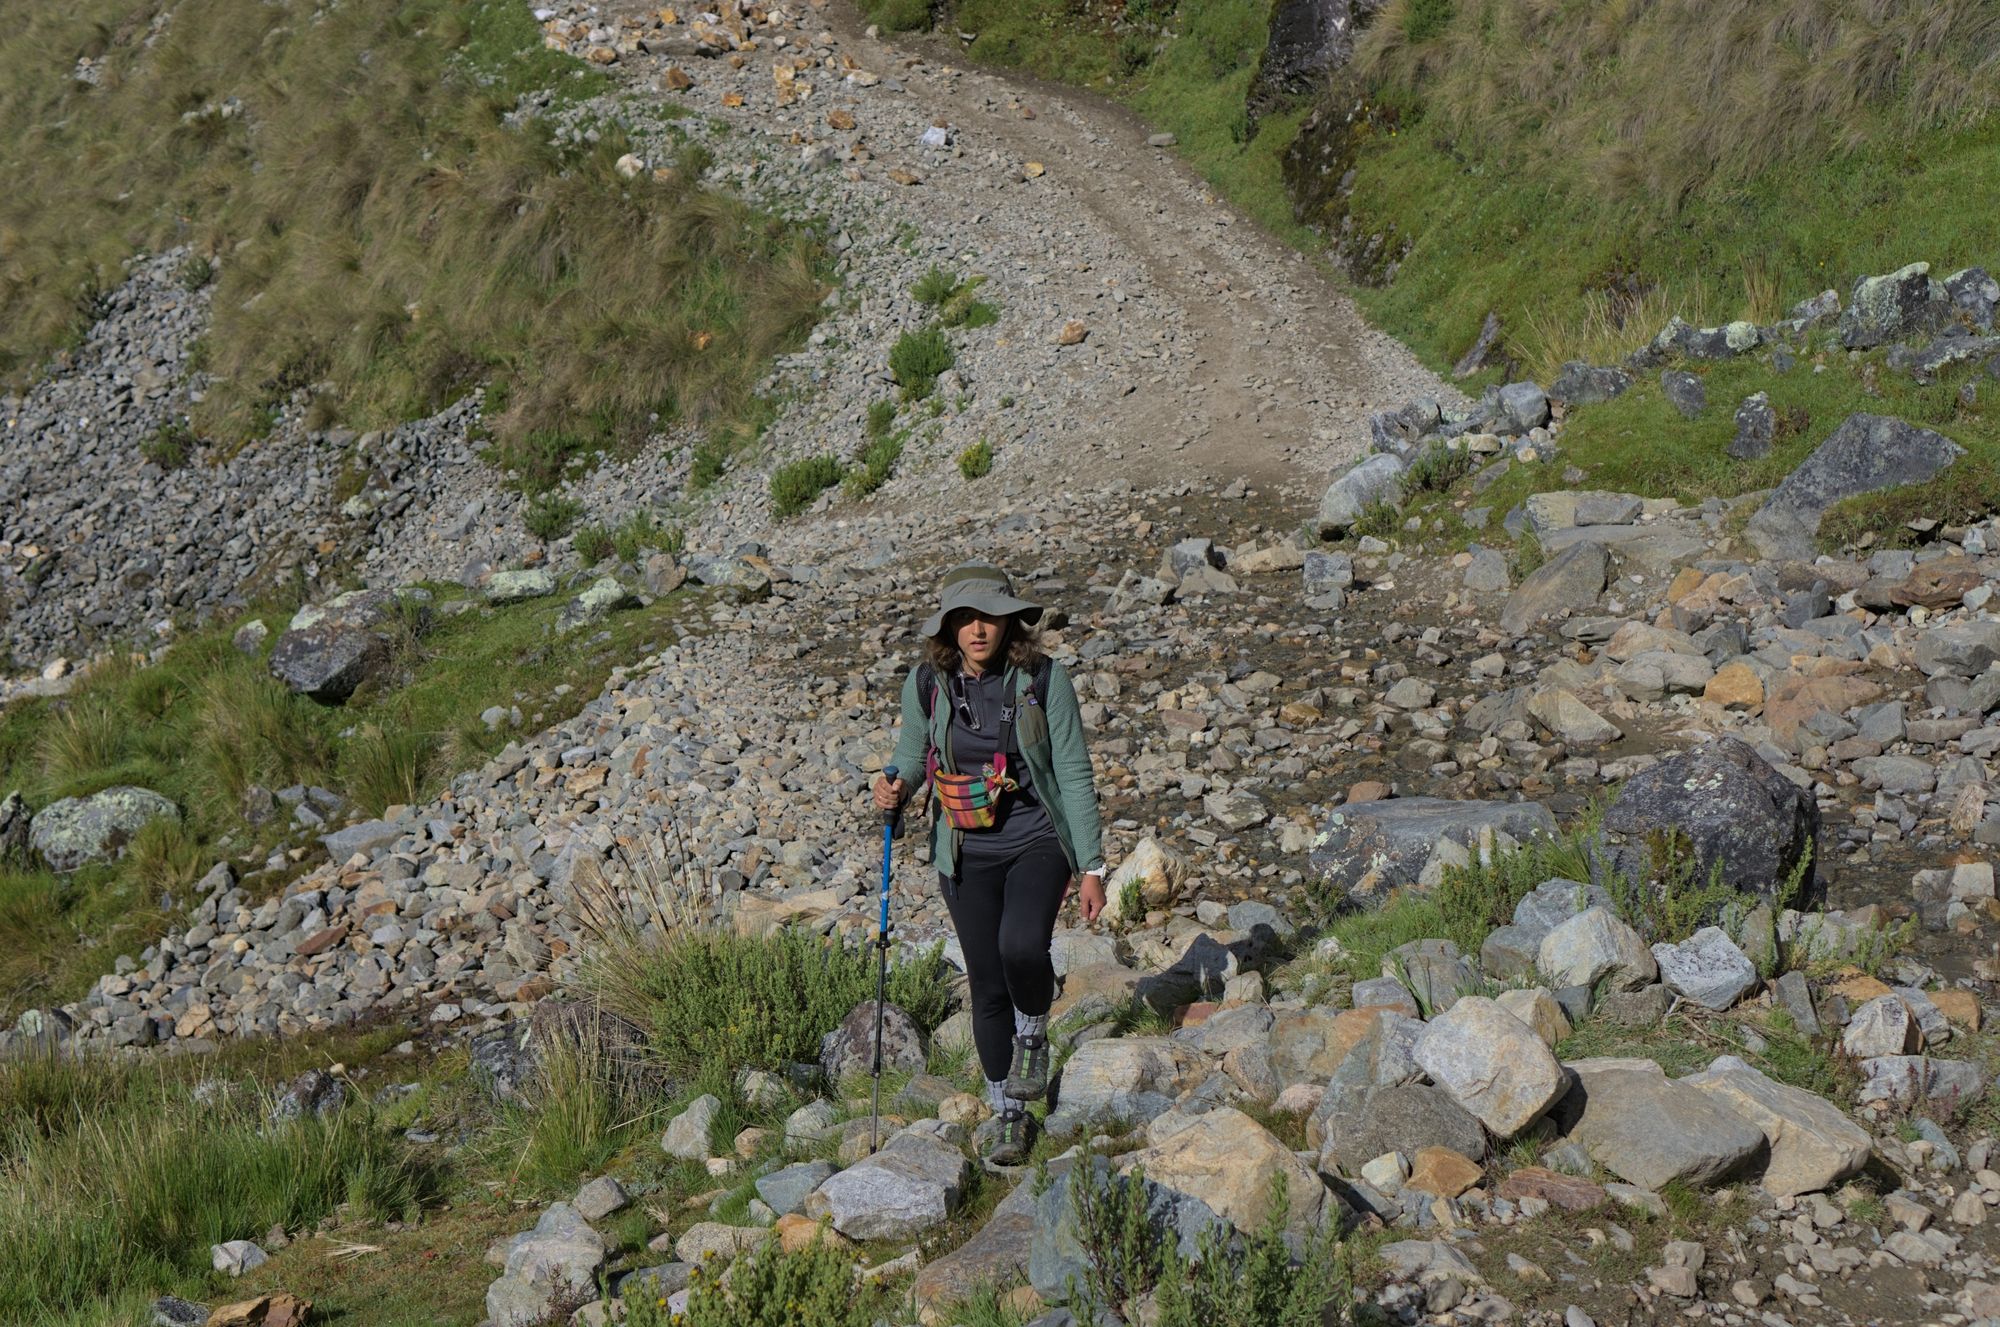 The road to Machu Picchu; the Salkantay trek unguided